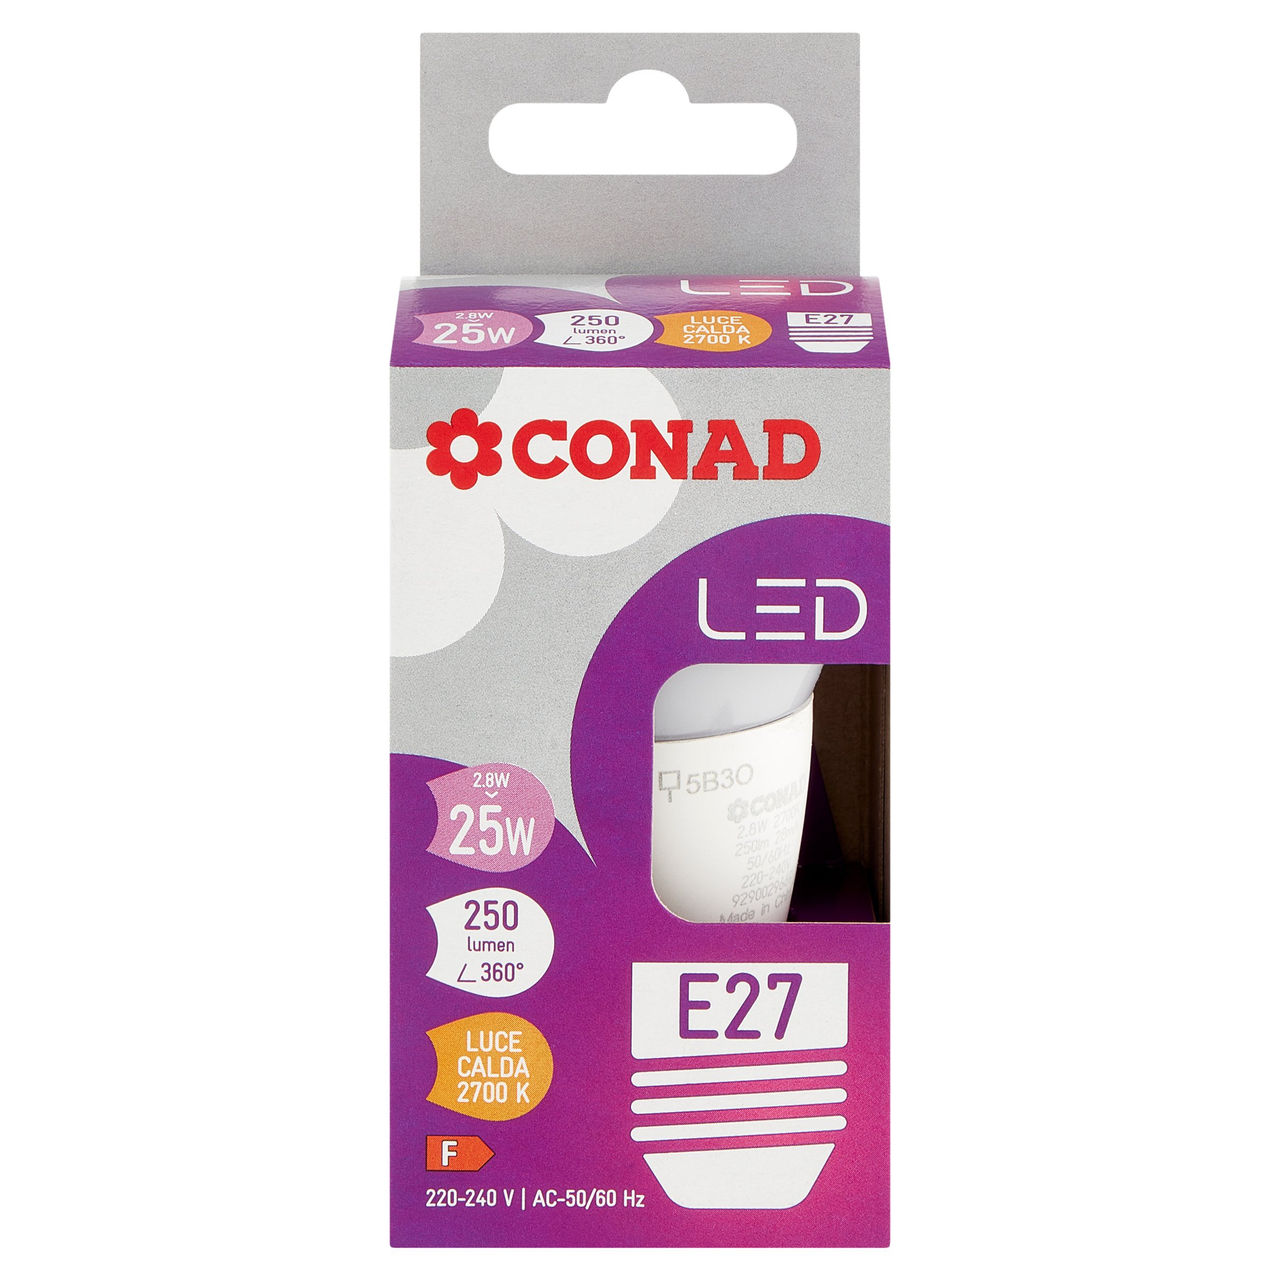 CONAD Led 2,8W 250 Lumen E27 Luce Calda